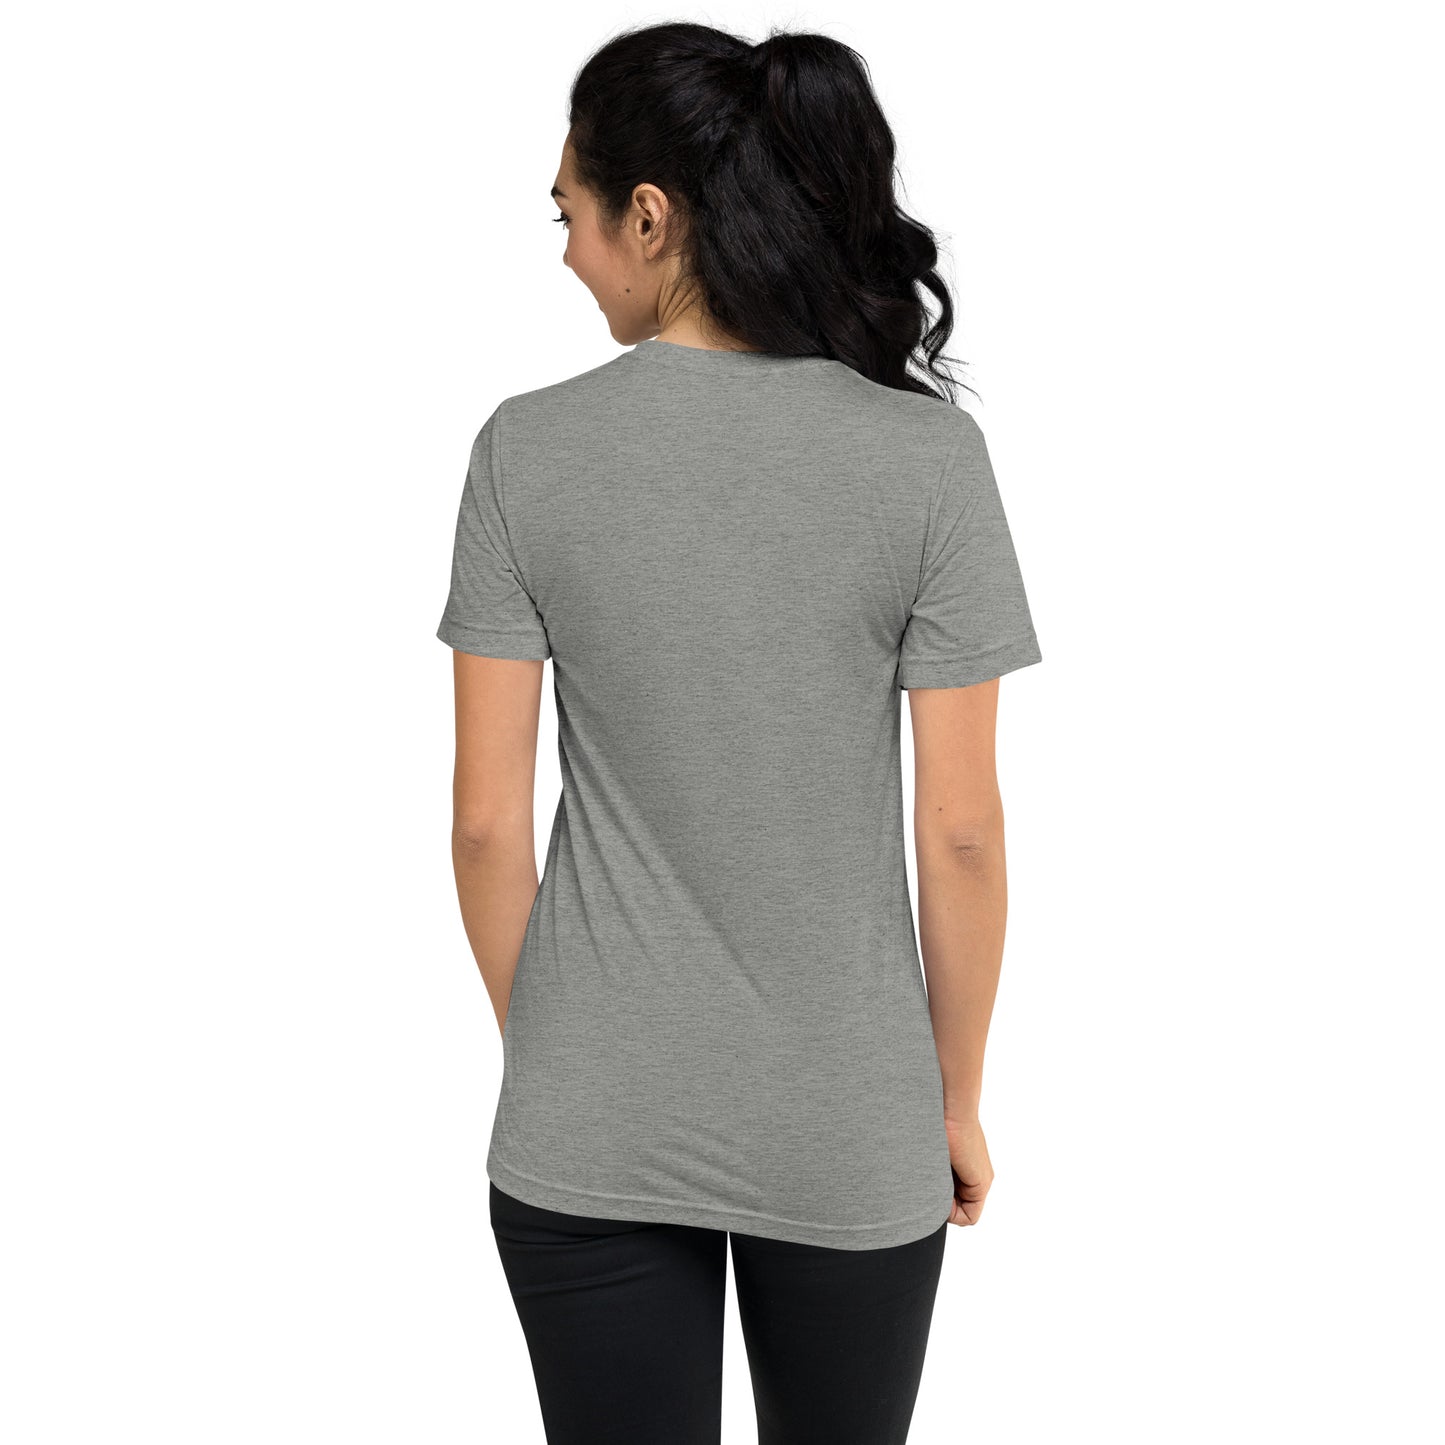 TN Tennessee Strong Short Sleeve Tri-Blend T-Shirt